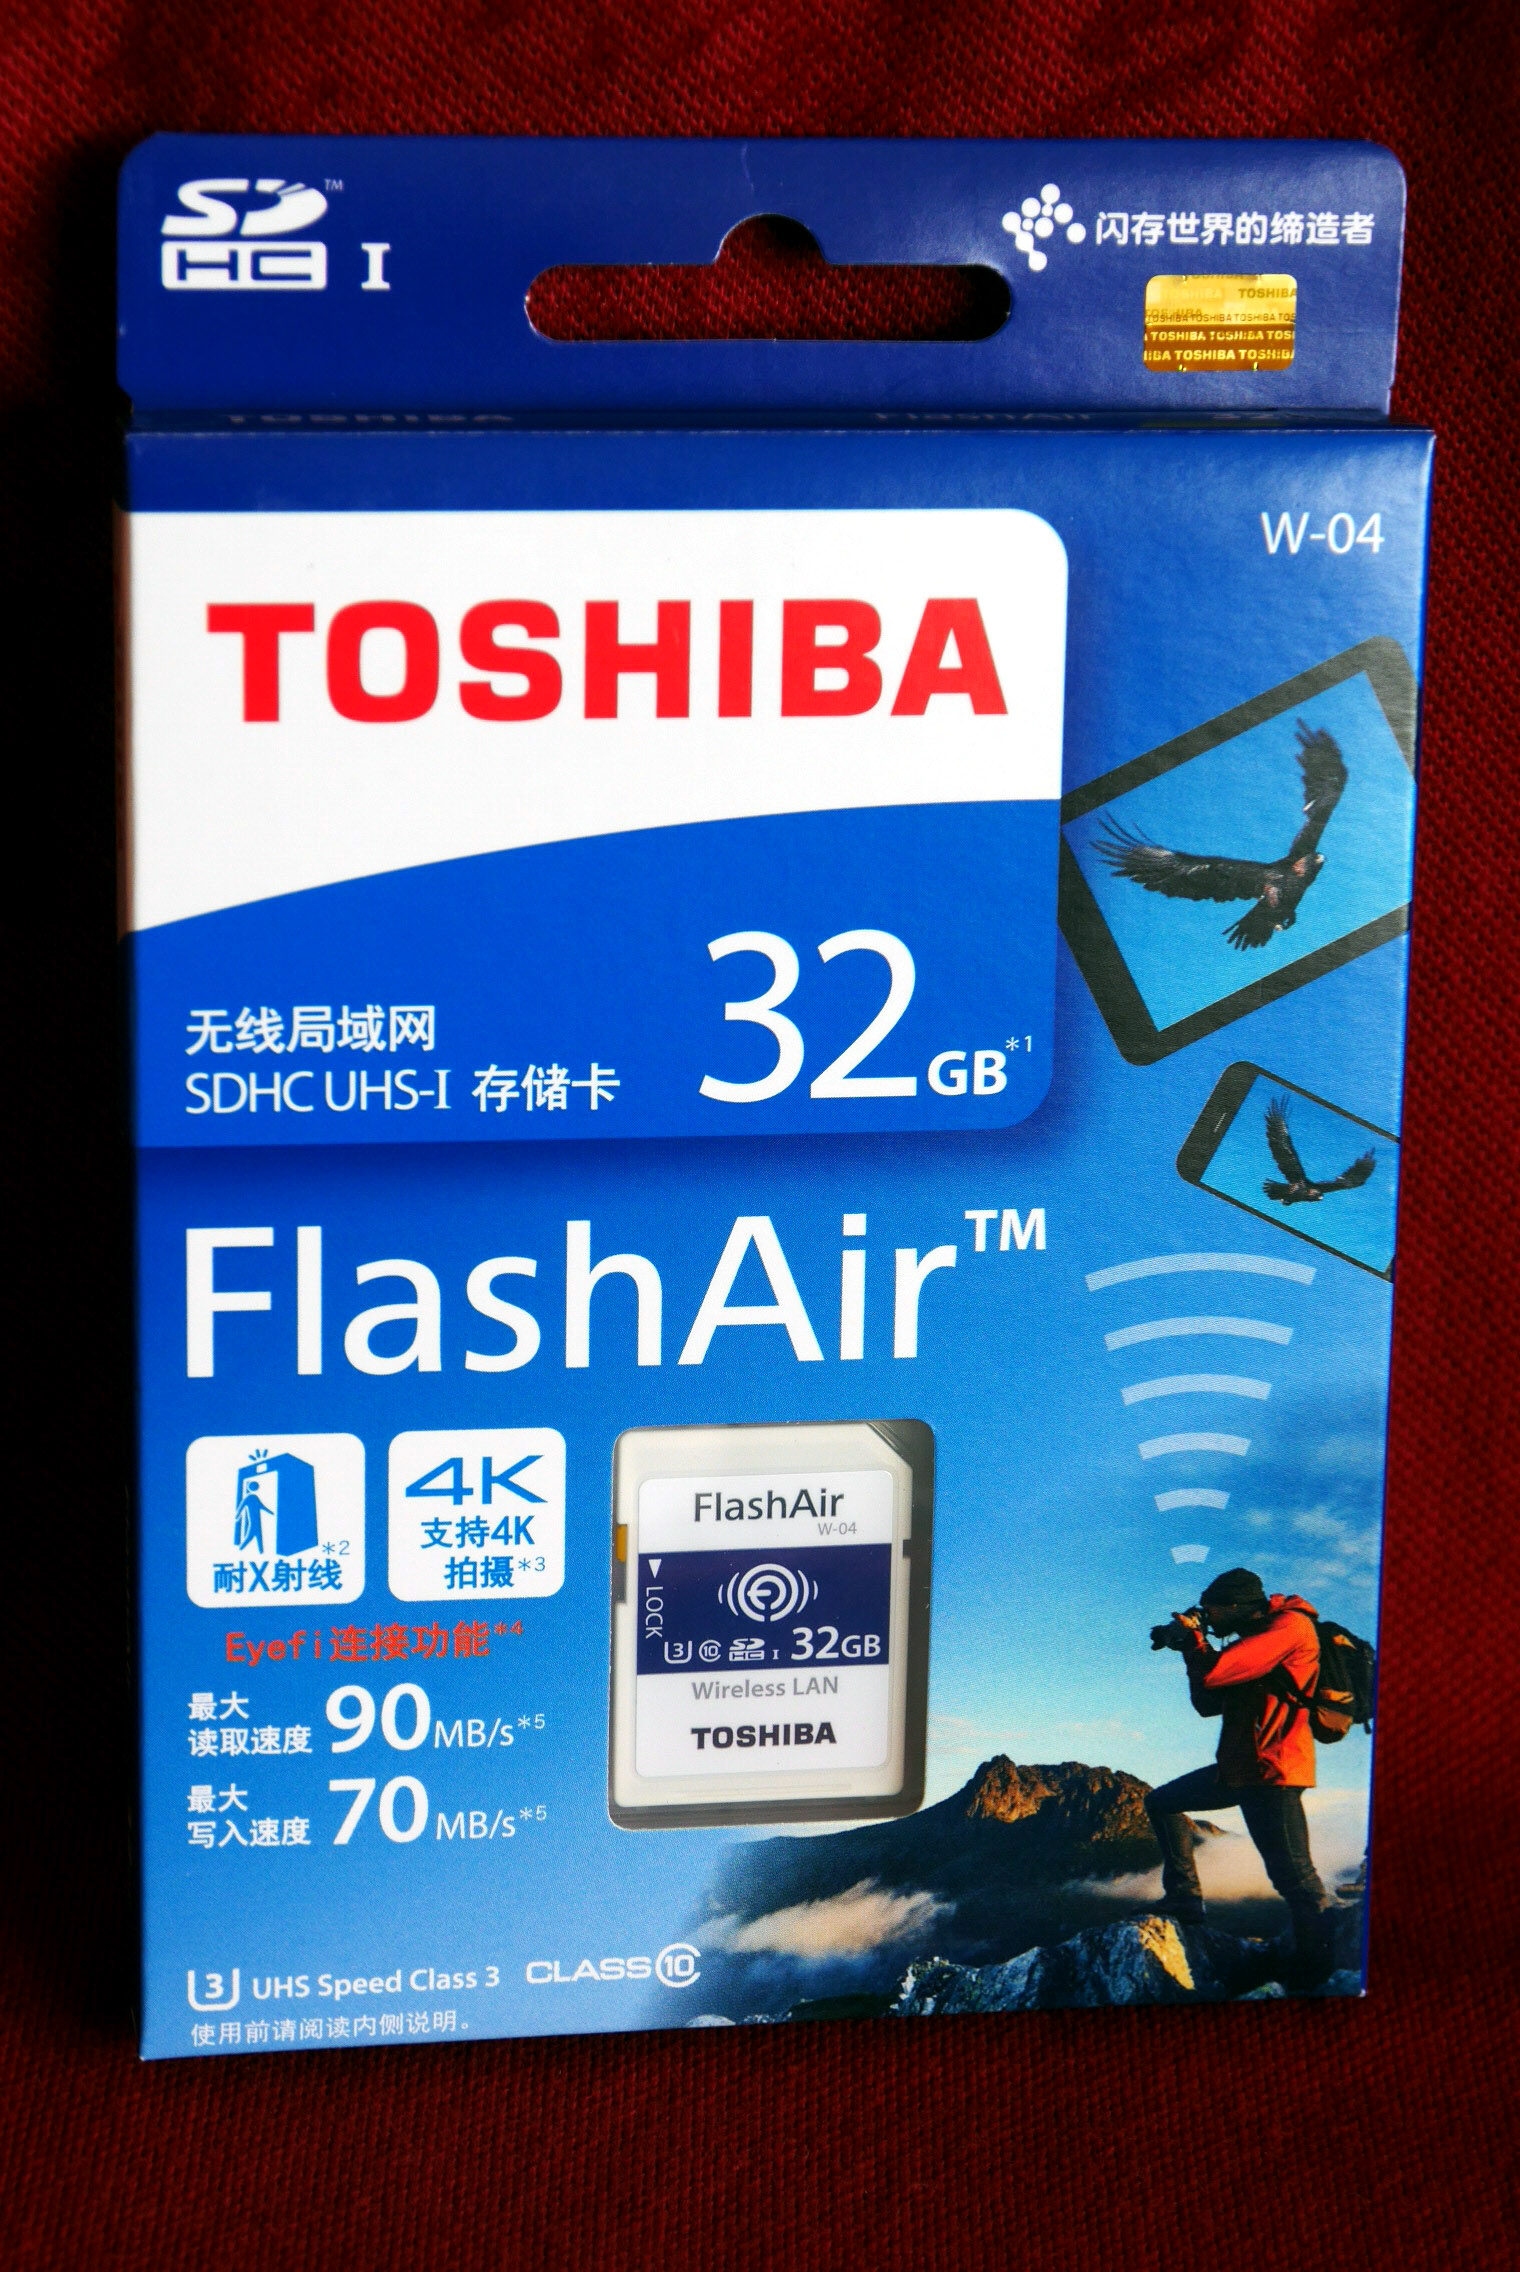 TOSHIBA FlashAir W-04 32GB-